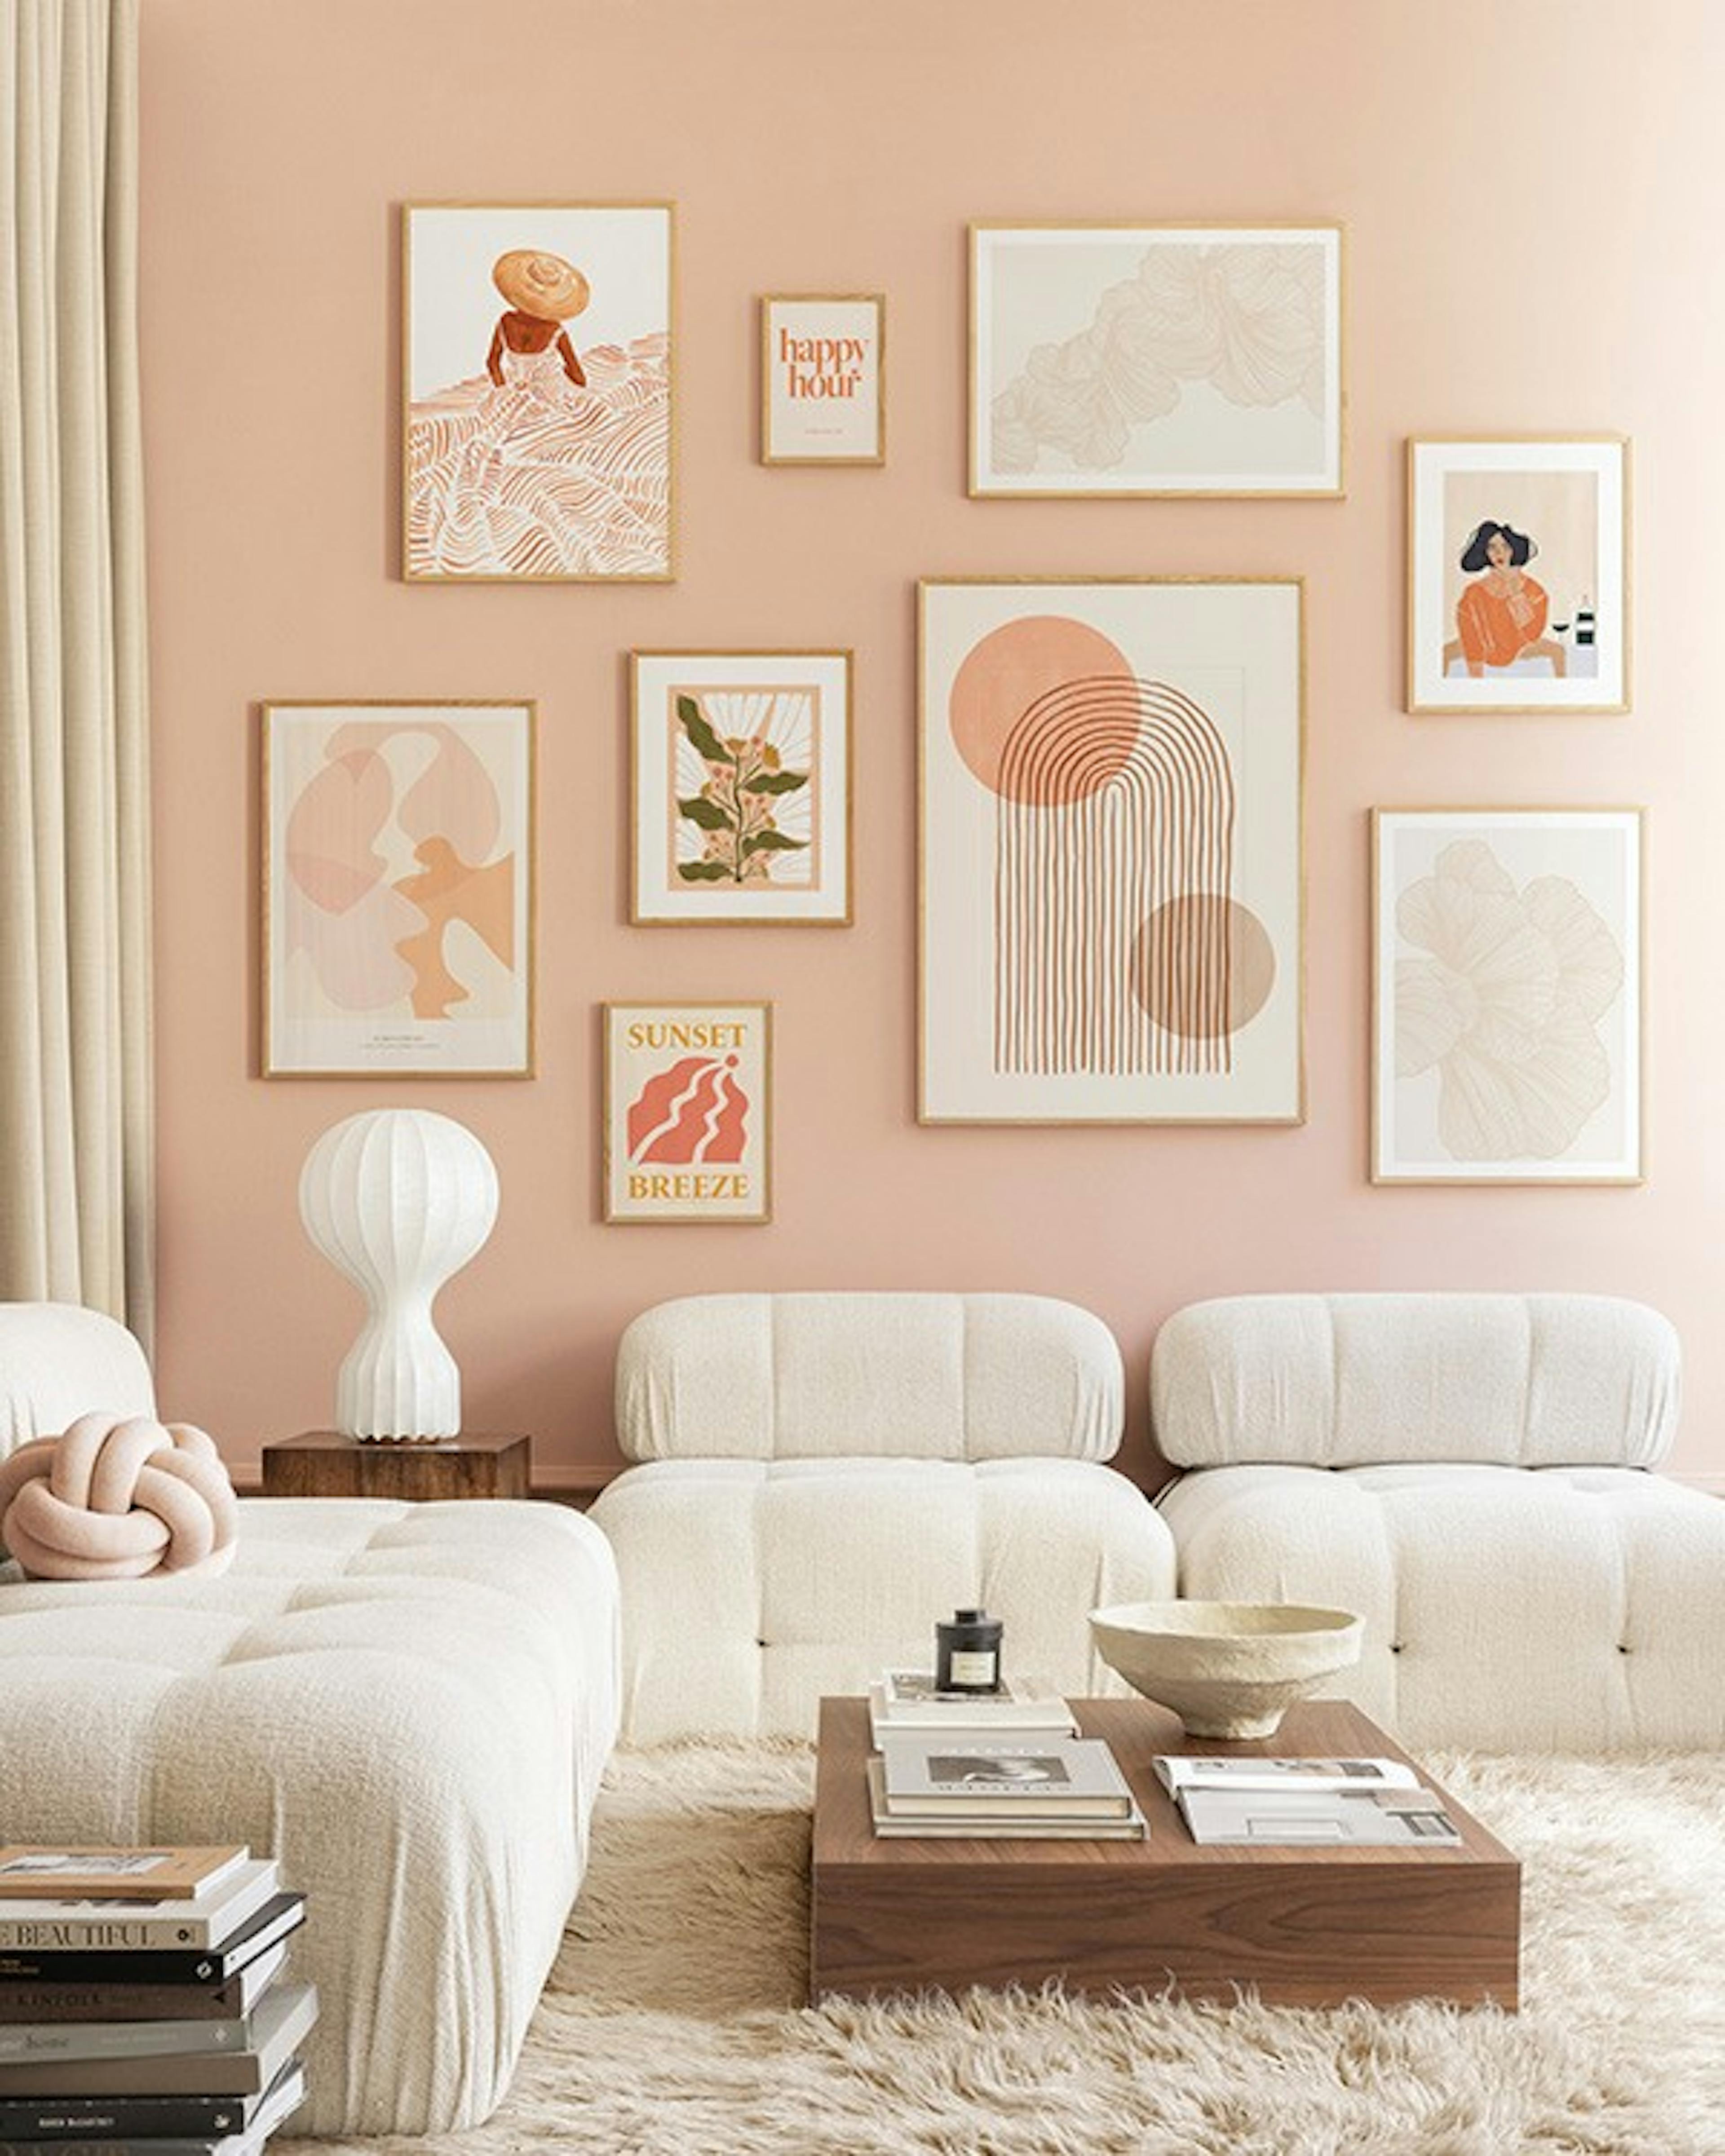 Peachy livingroom decoration murale